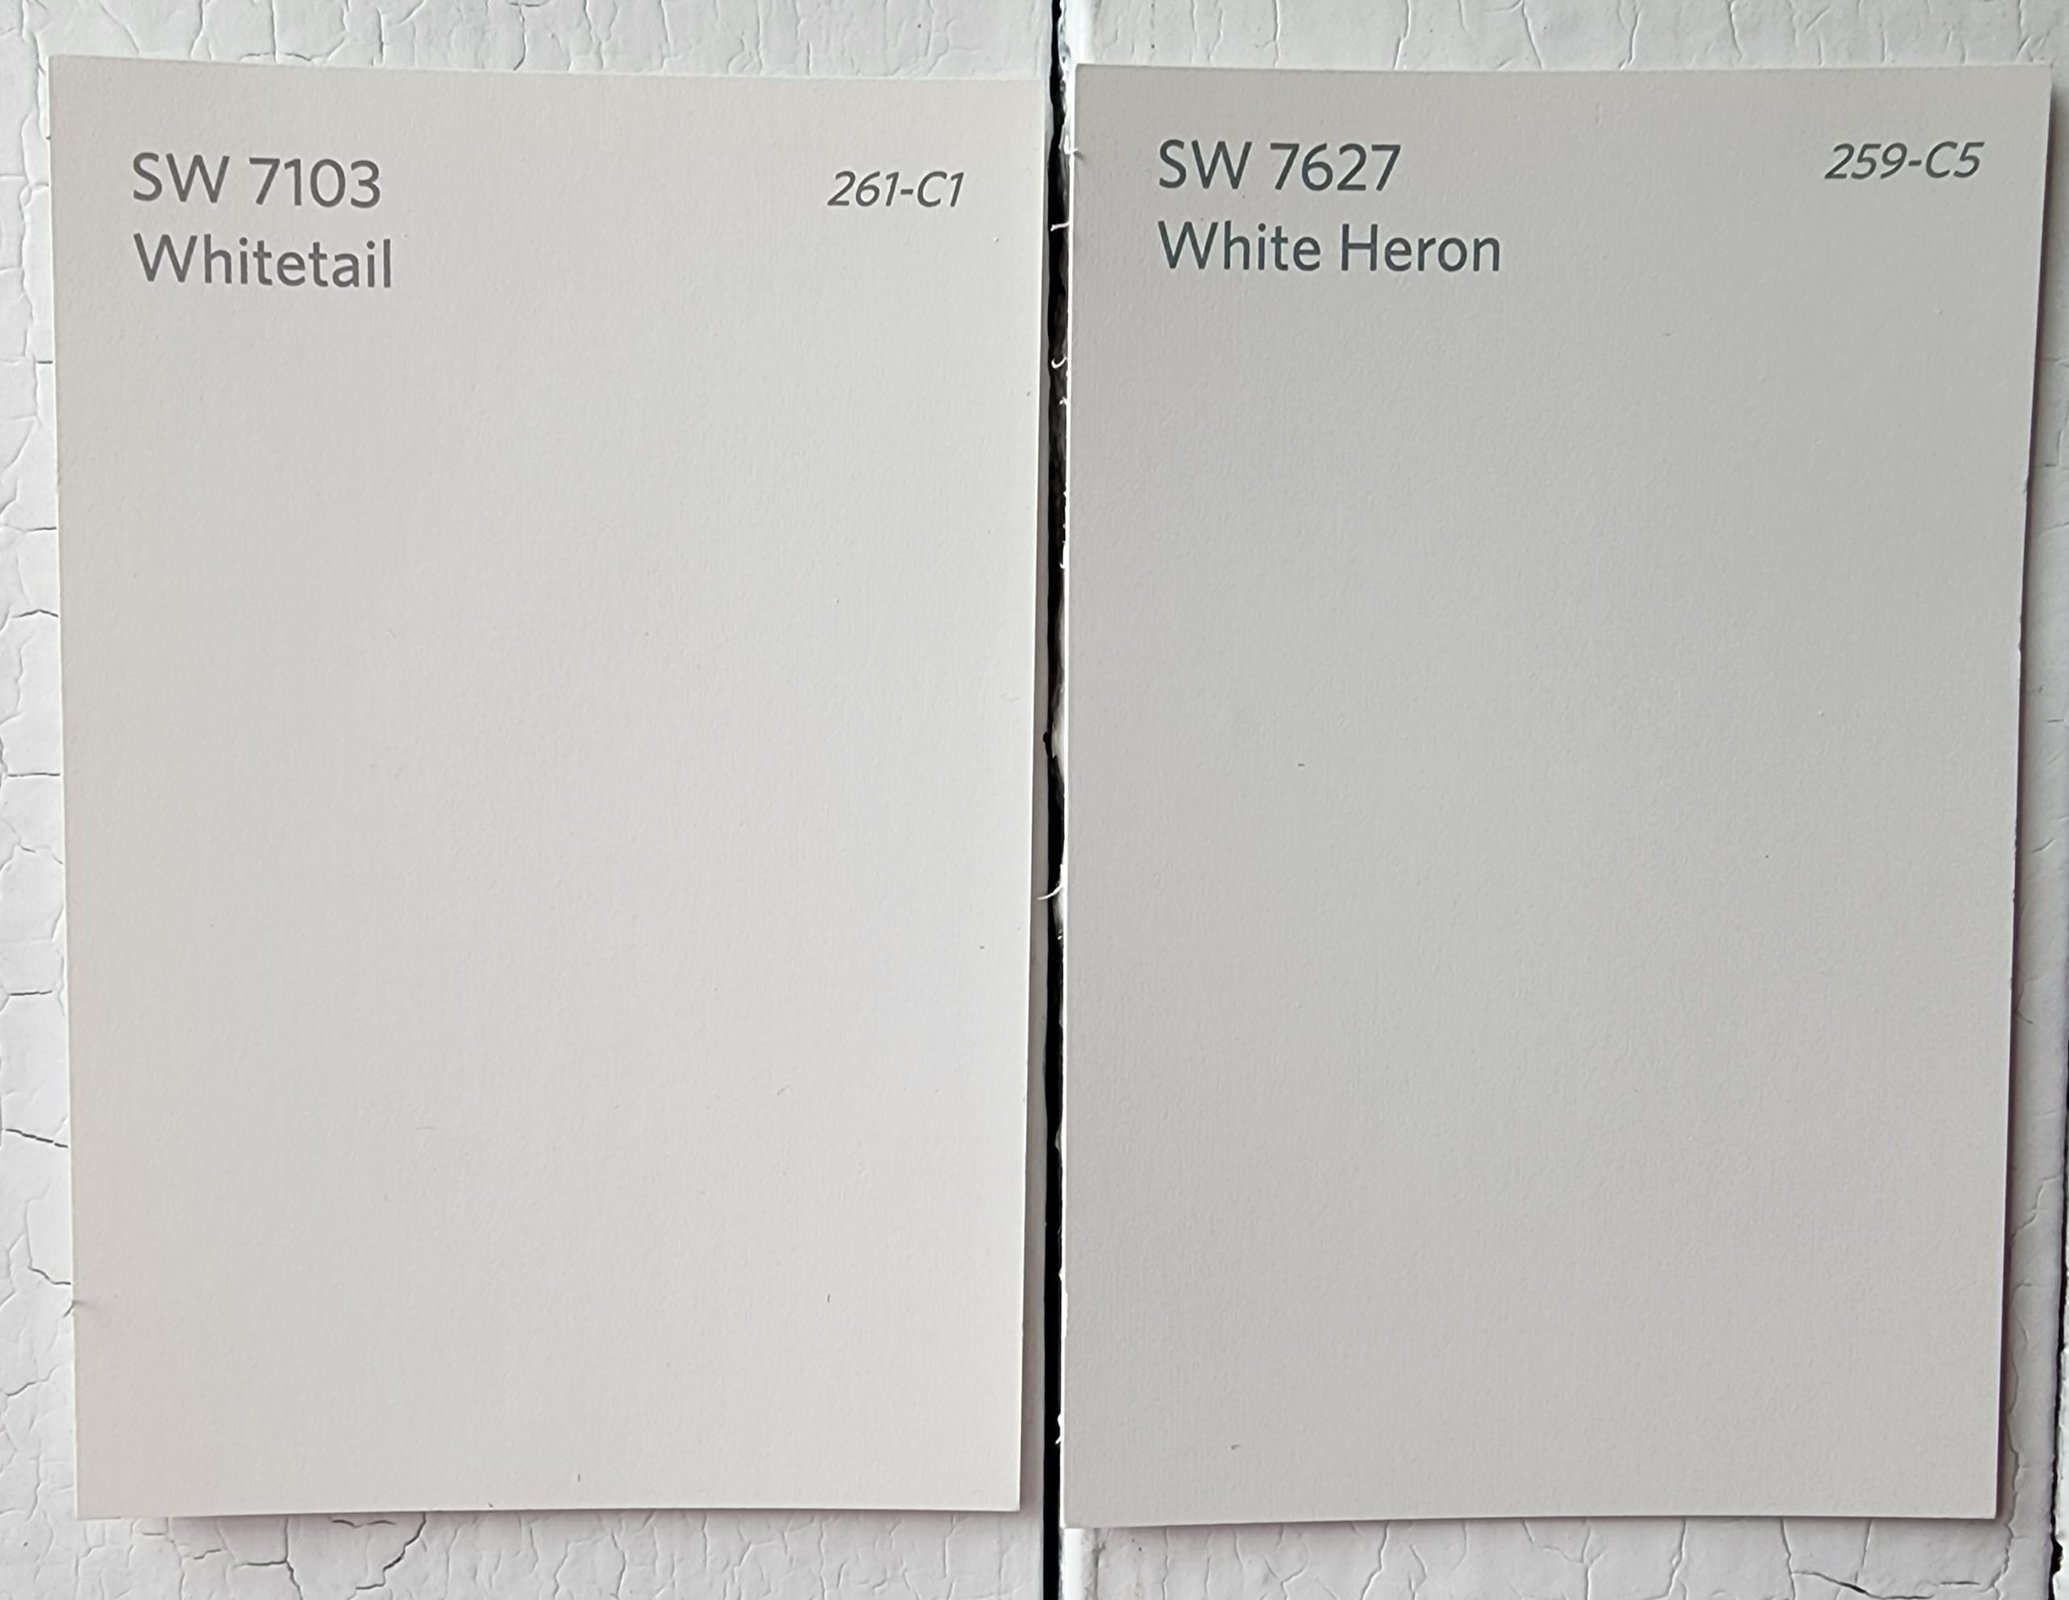  Whitetail vs White Heron by Sherwin Williams scaled